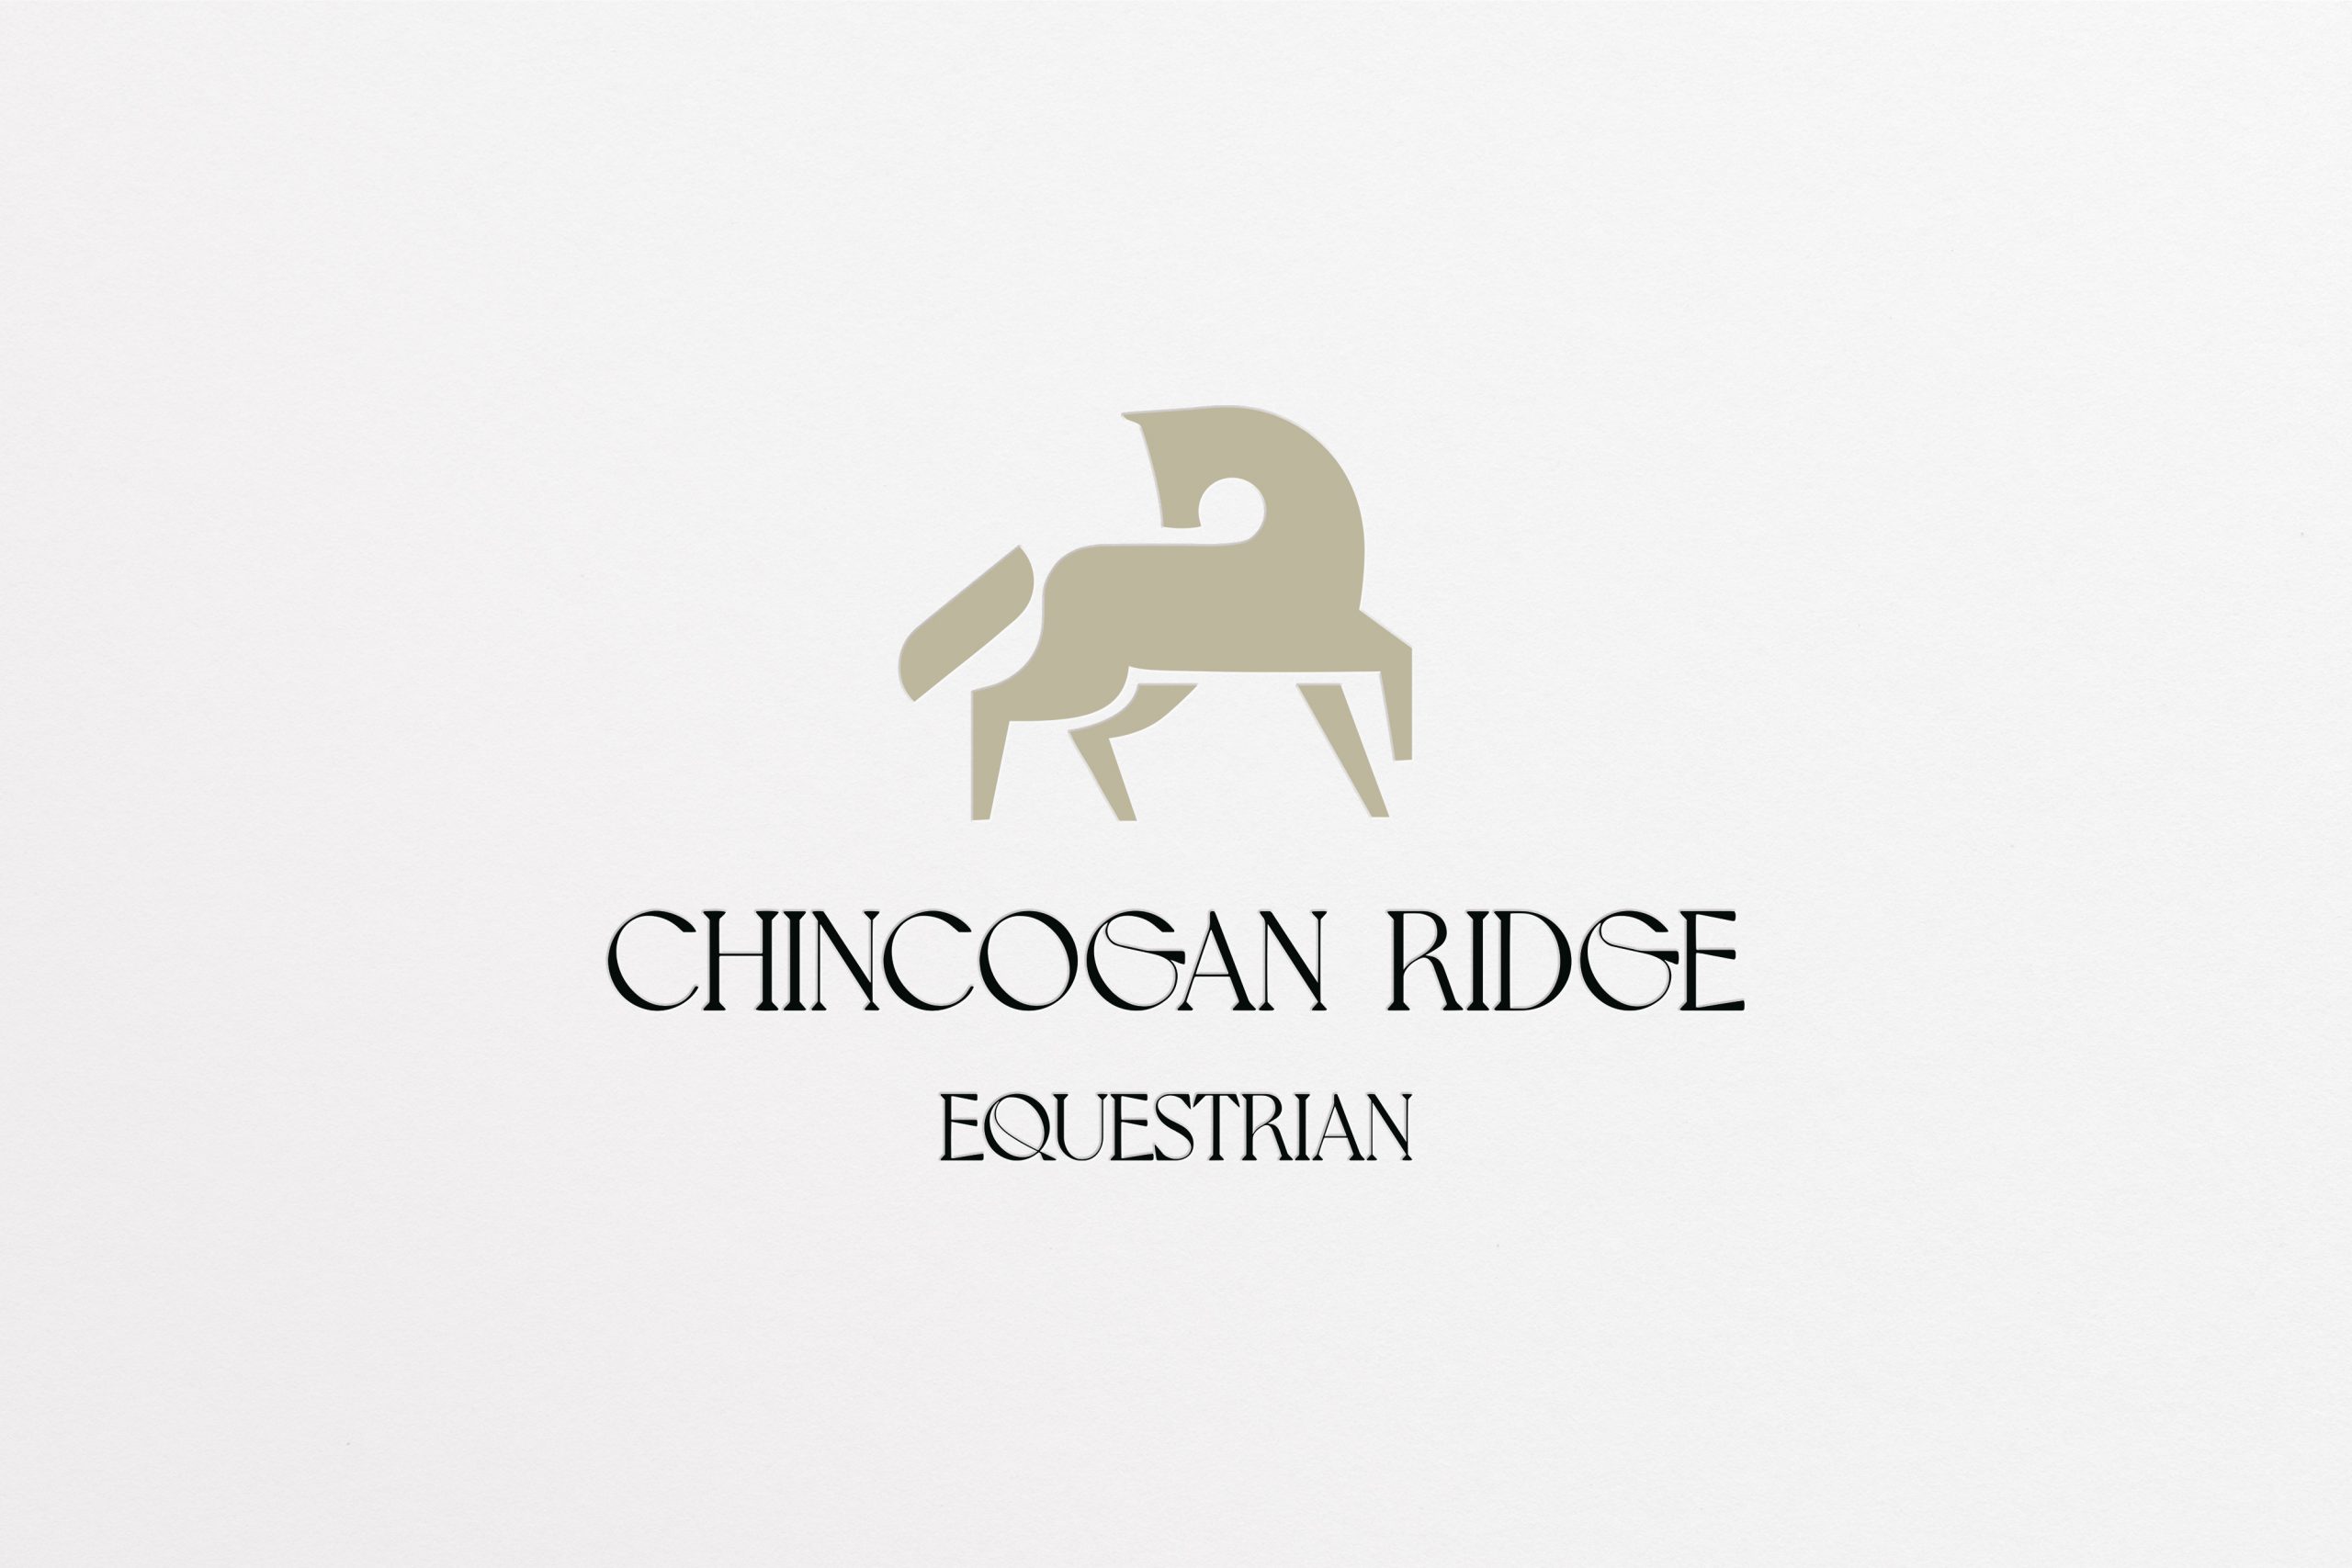 Chincogan Ridge logo